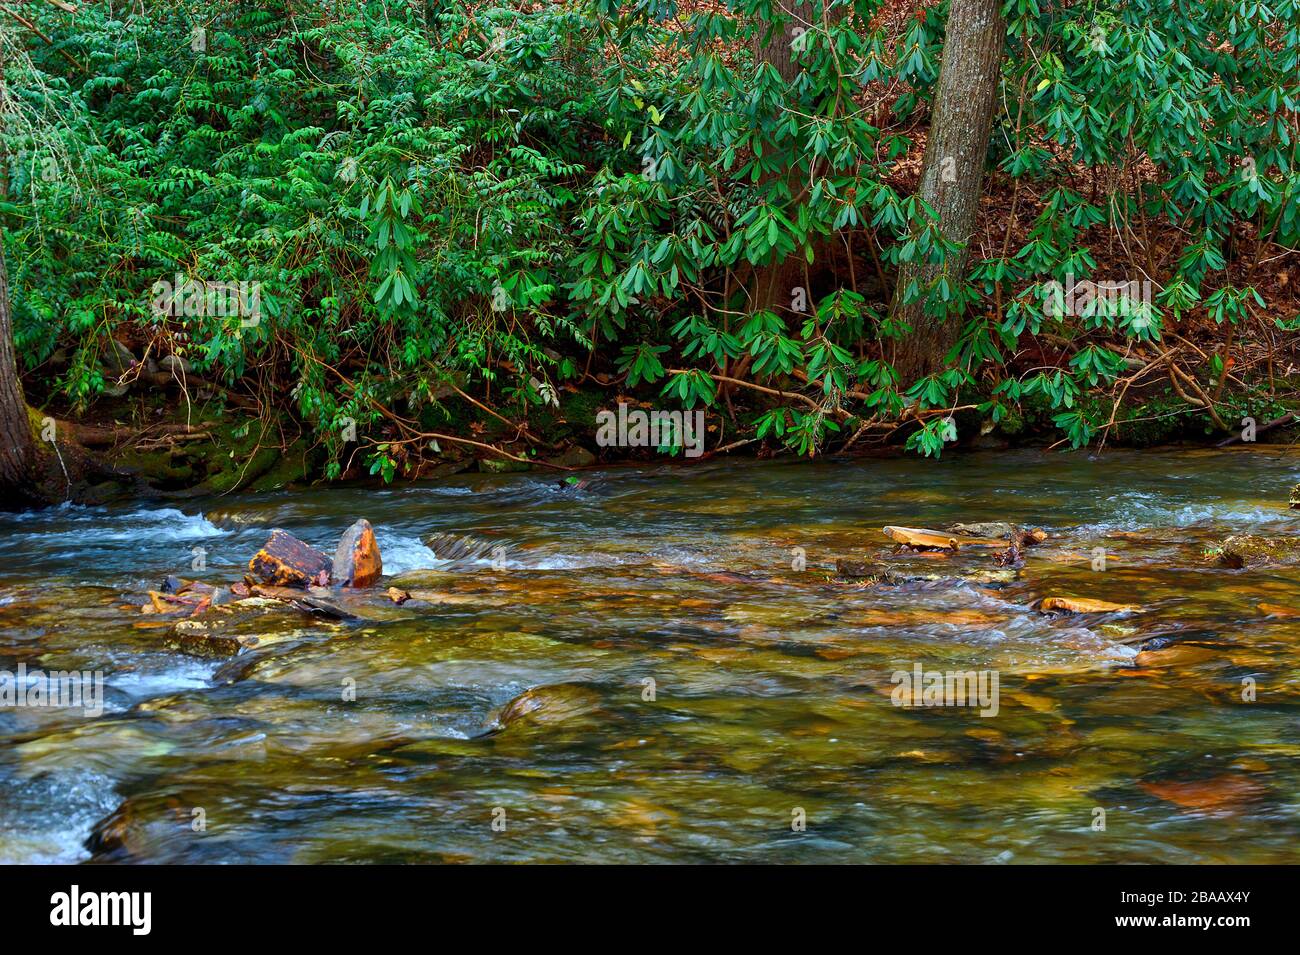 Nature's beauty along the water's edge of Stoney Creek near Dungannon Virginia. Stock Photo